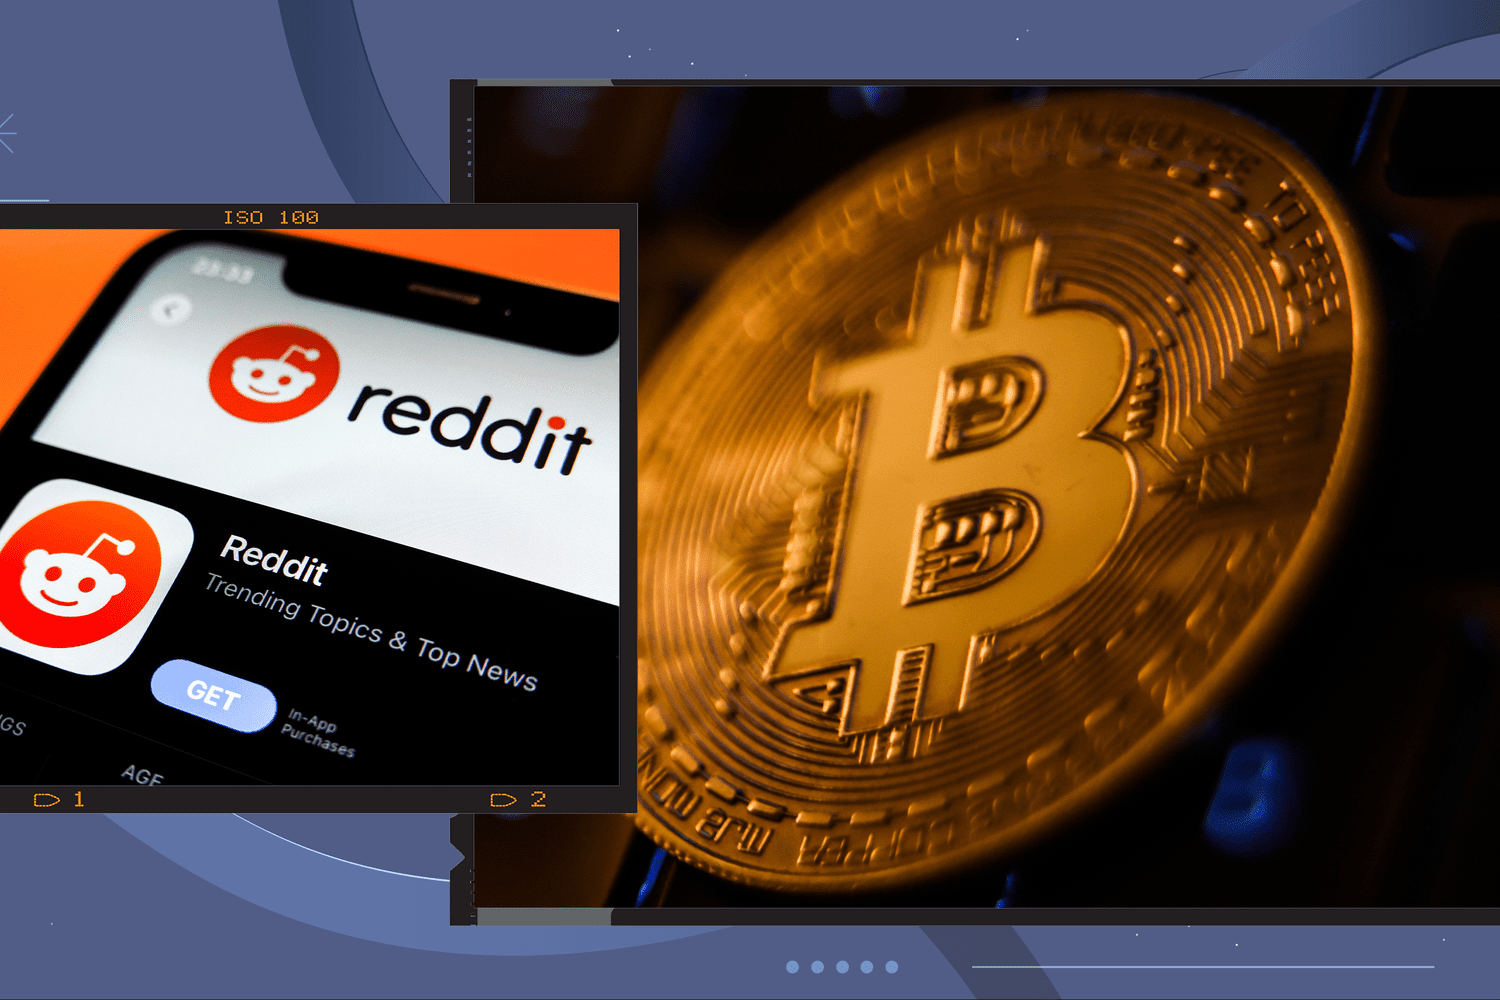 Reddit's Big Move With Bitcoin & Ethereum